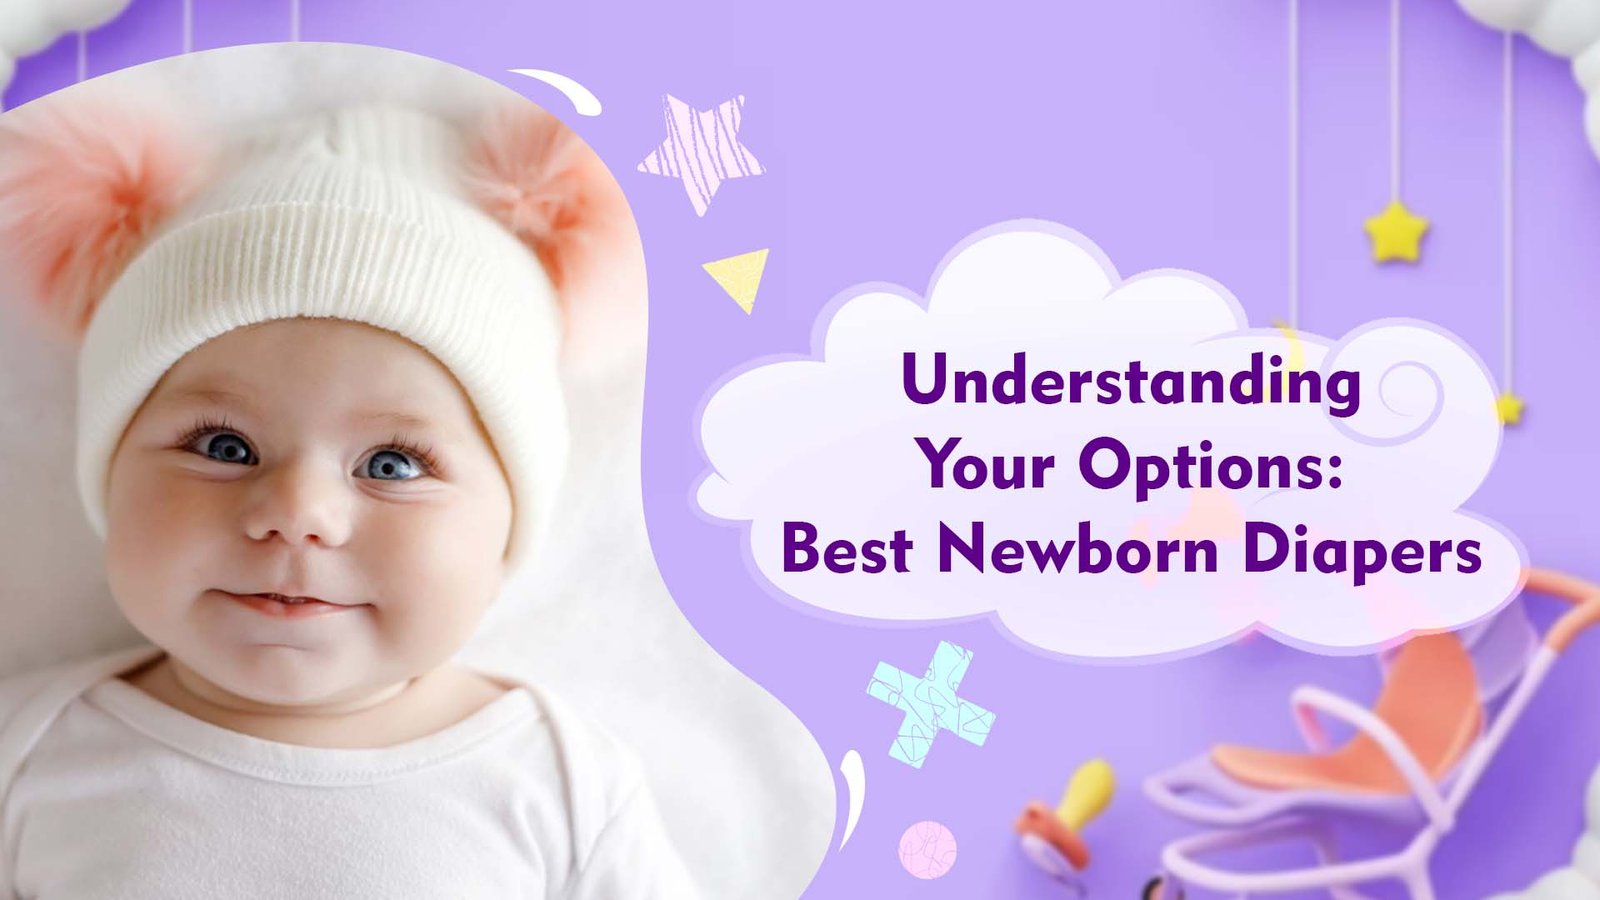 Best newborn diapers